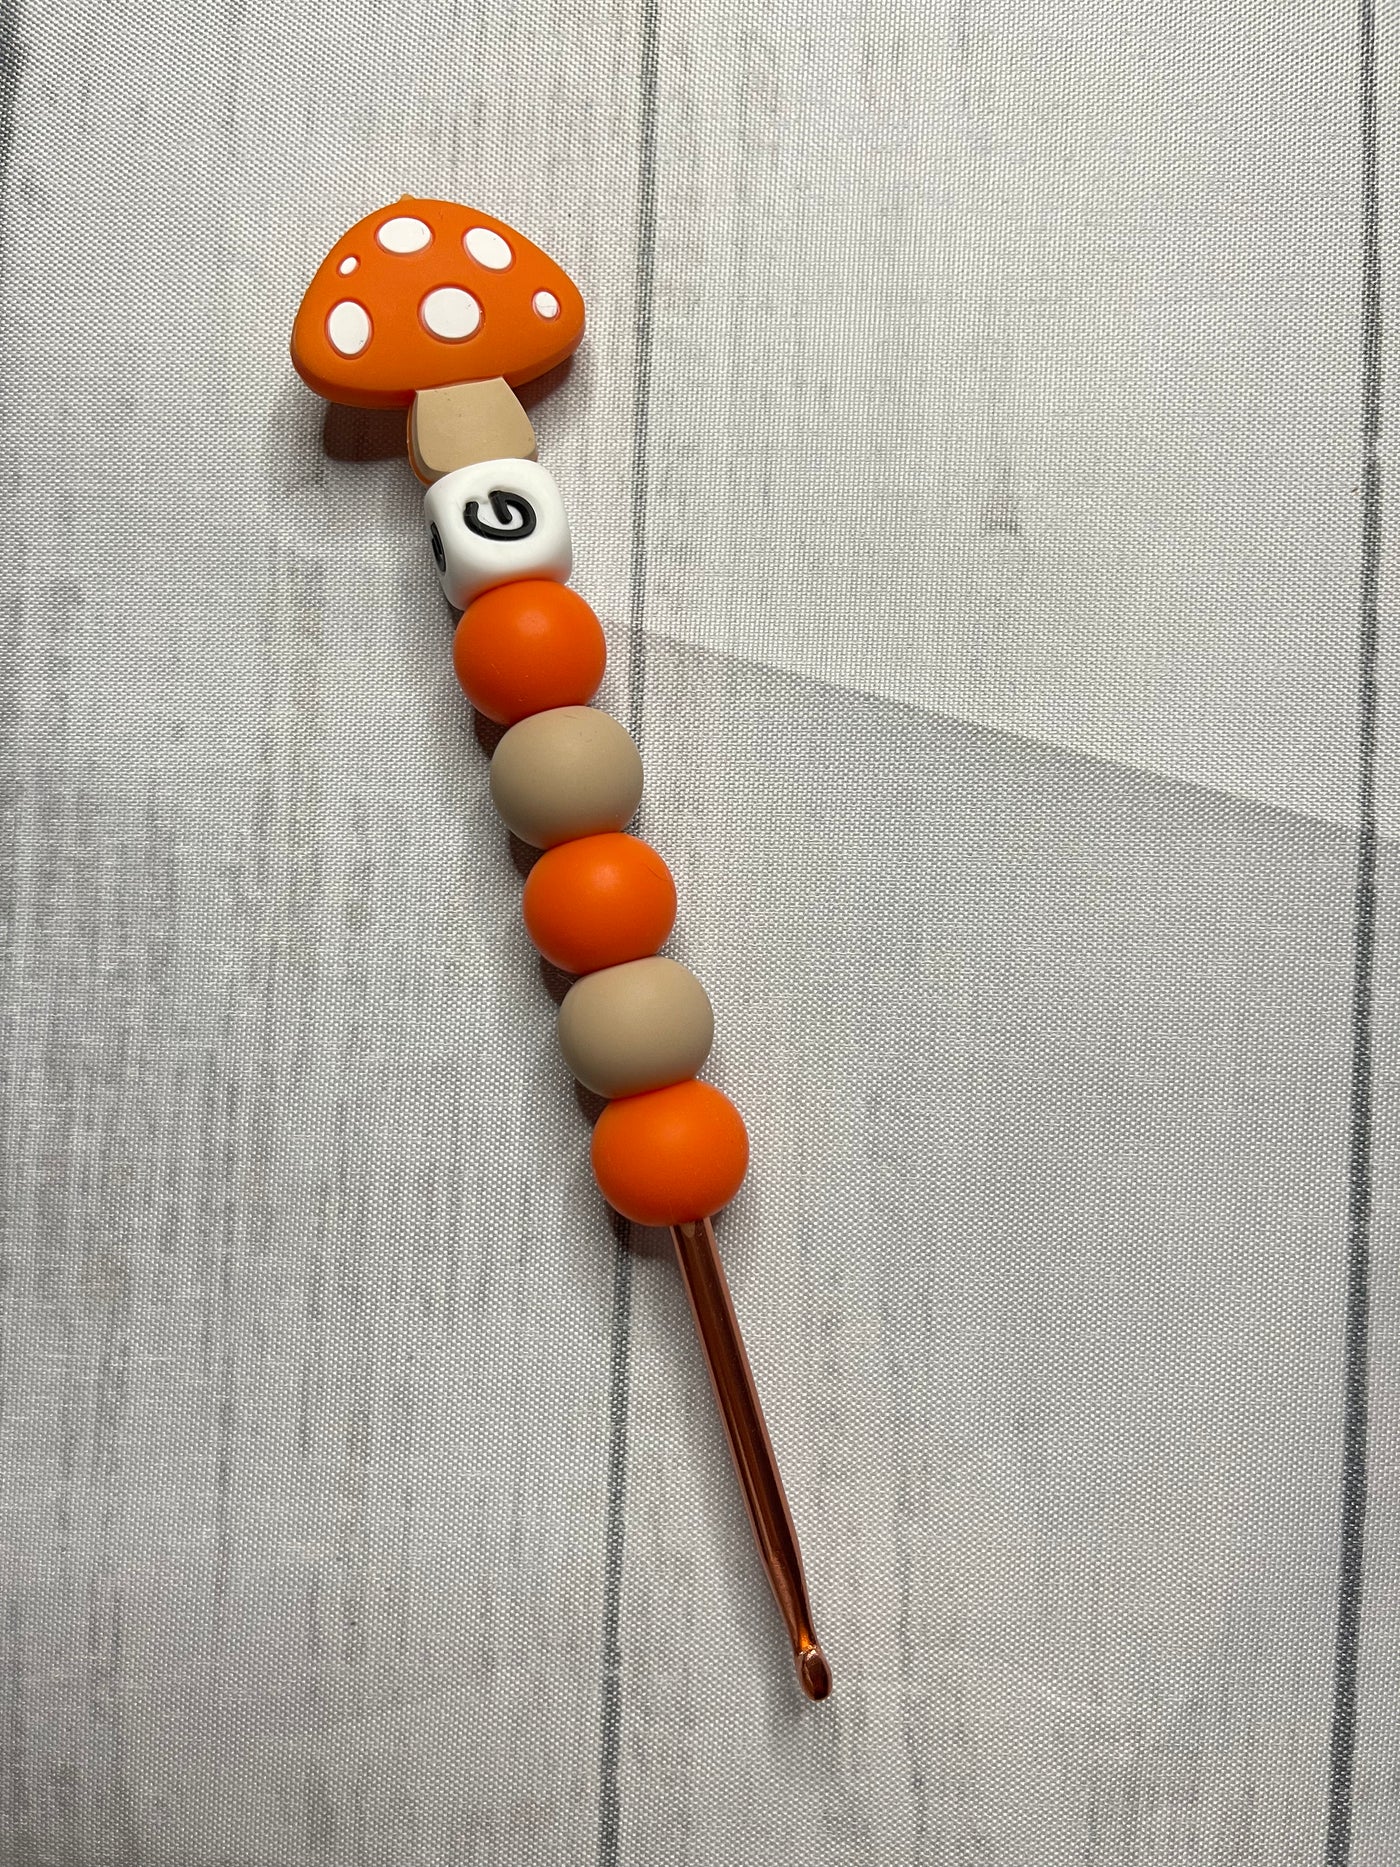 Orange Mushroom Ergonomic Crochet Hook